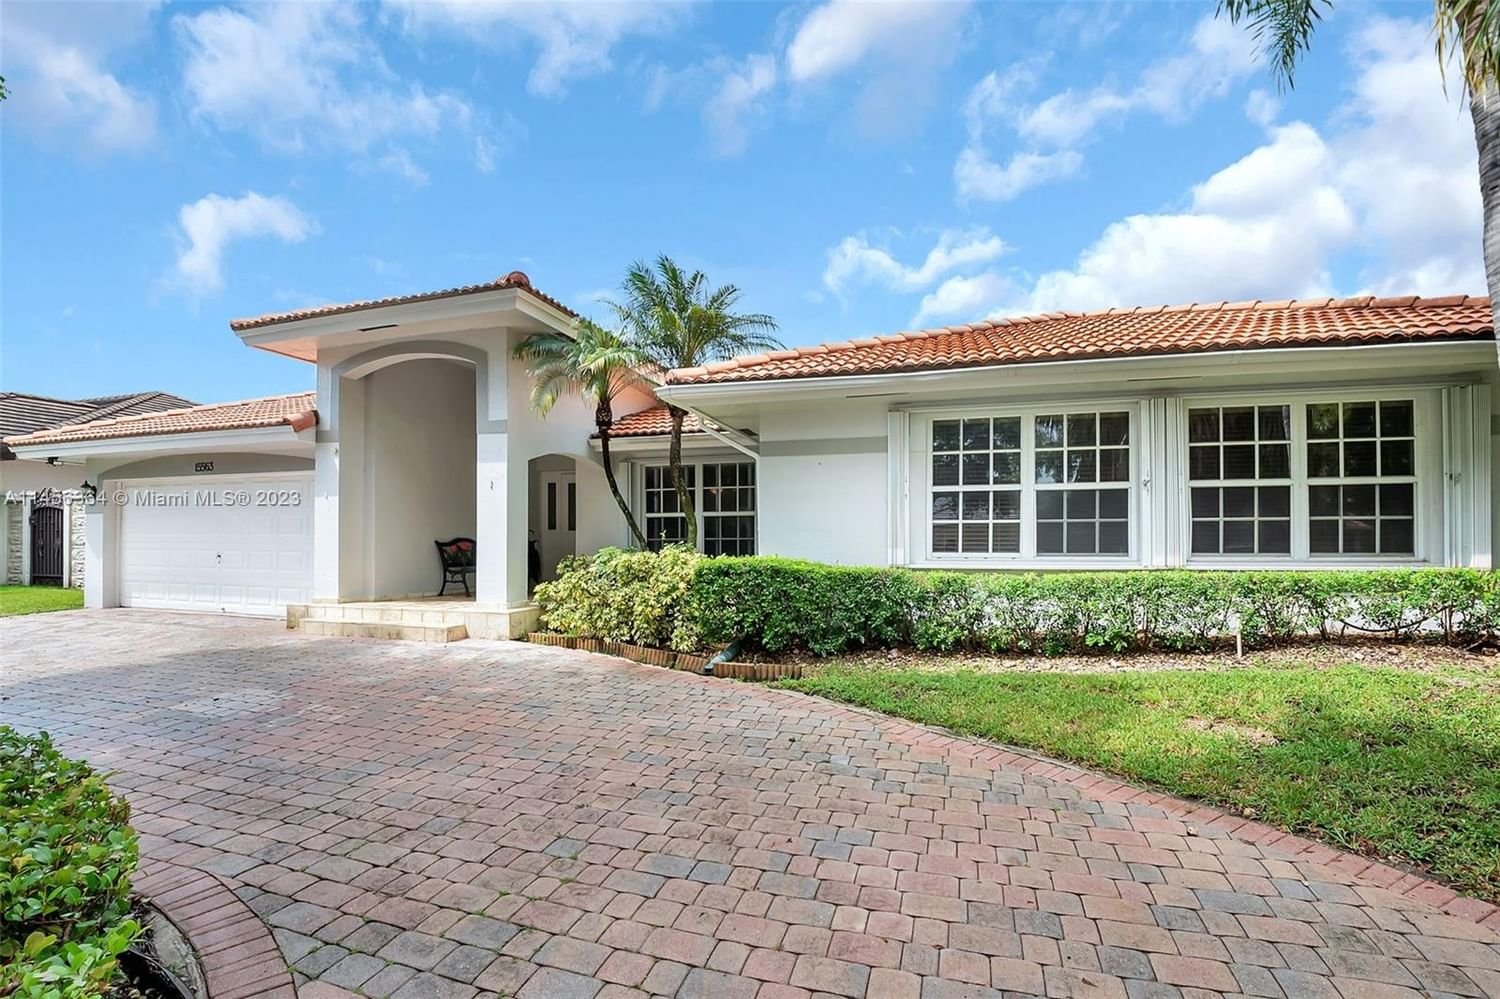 Real estate property located at 15563 115th St, Miami-Dade County, Miami, FL